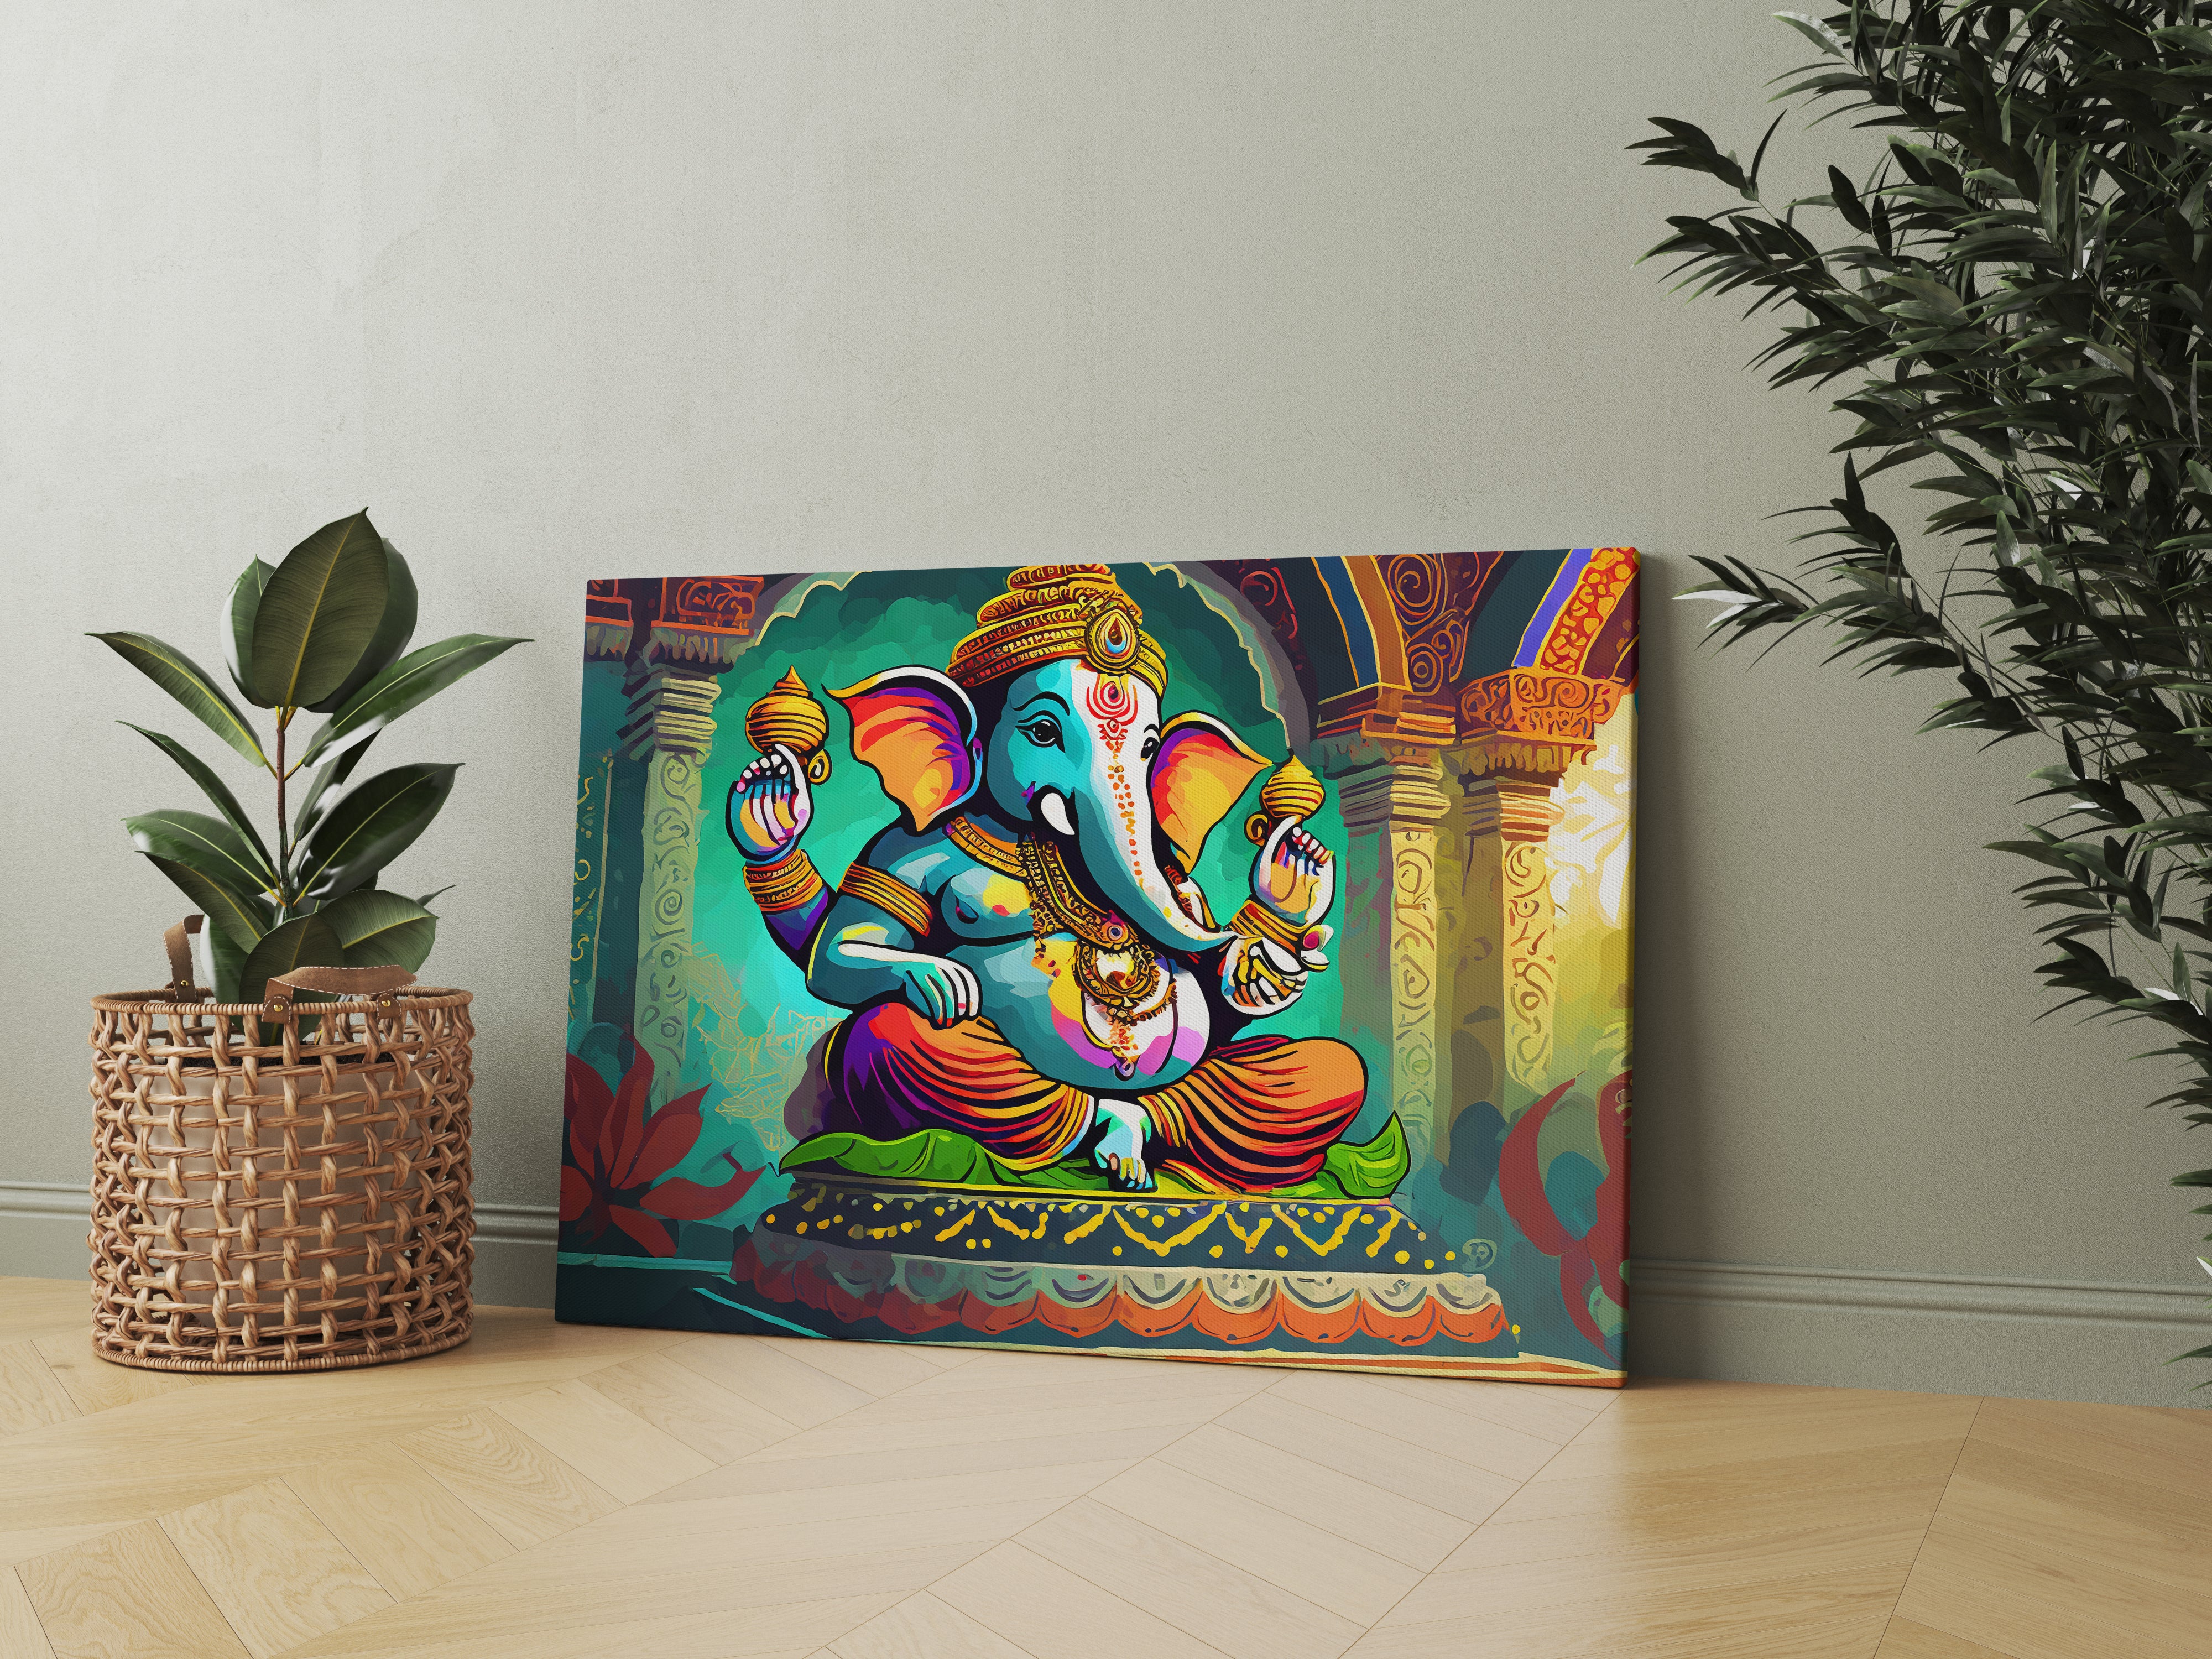 Lord Ganesha Colofur Canvas Wall Painting